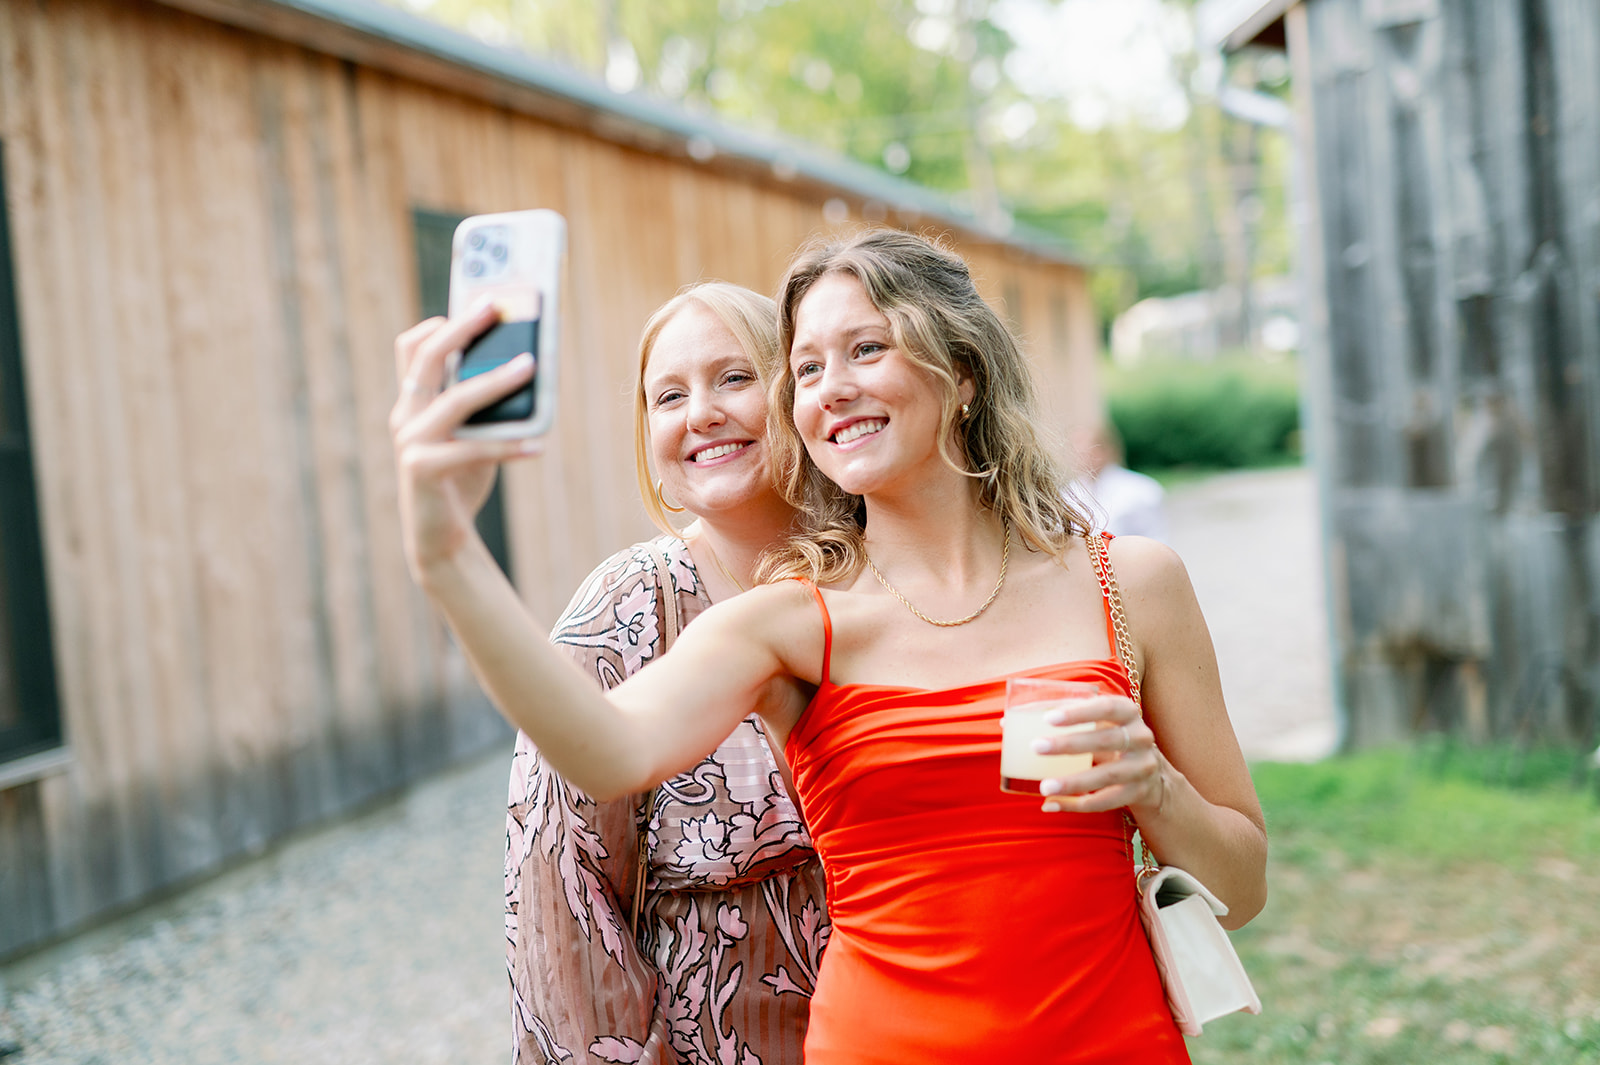 Wedding guests taking a selfie.